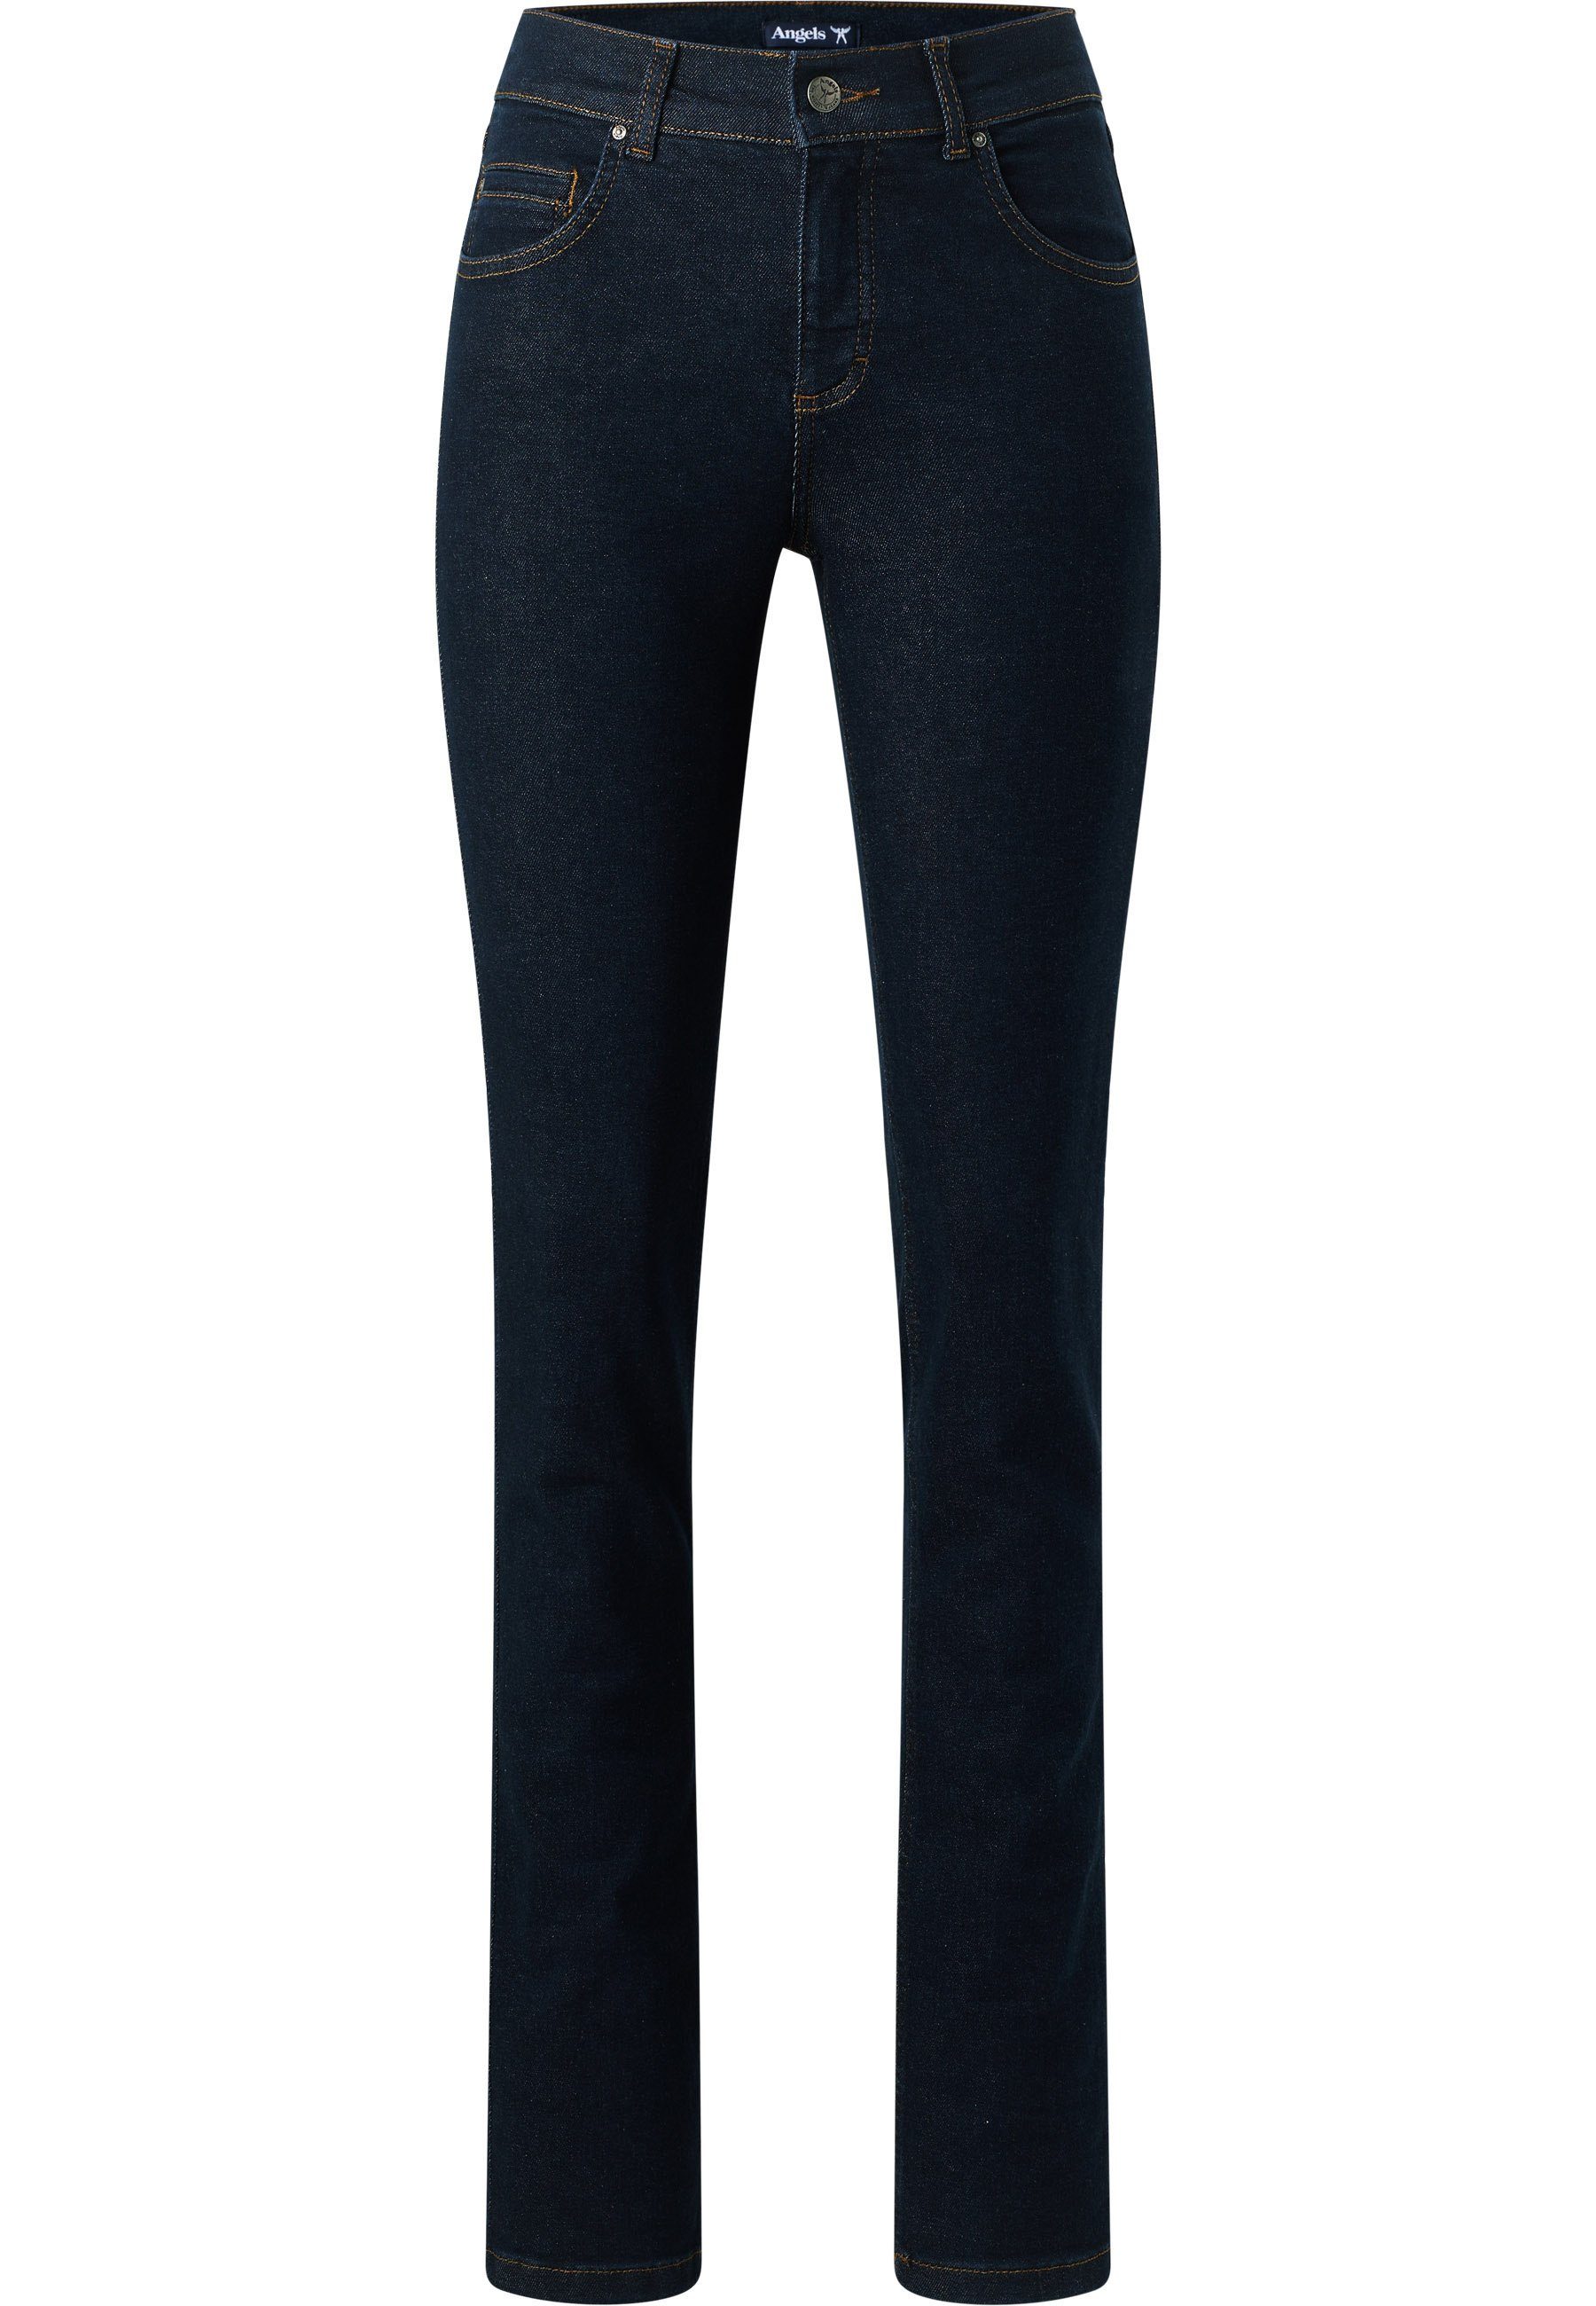 ANGELS Straight-Jeans Jeans mit mit Cici Label-Applikationen dunkelblau Used-Waschung